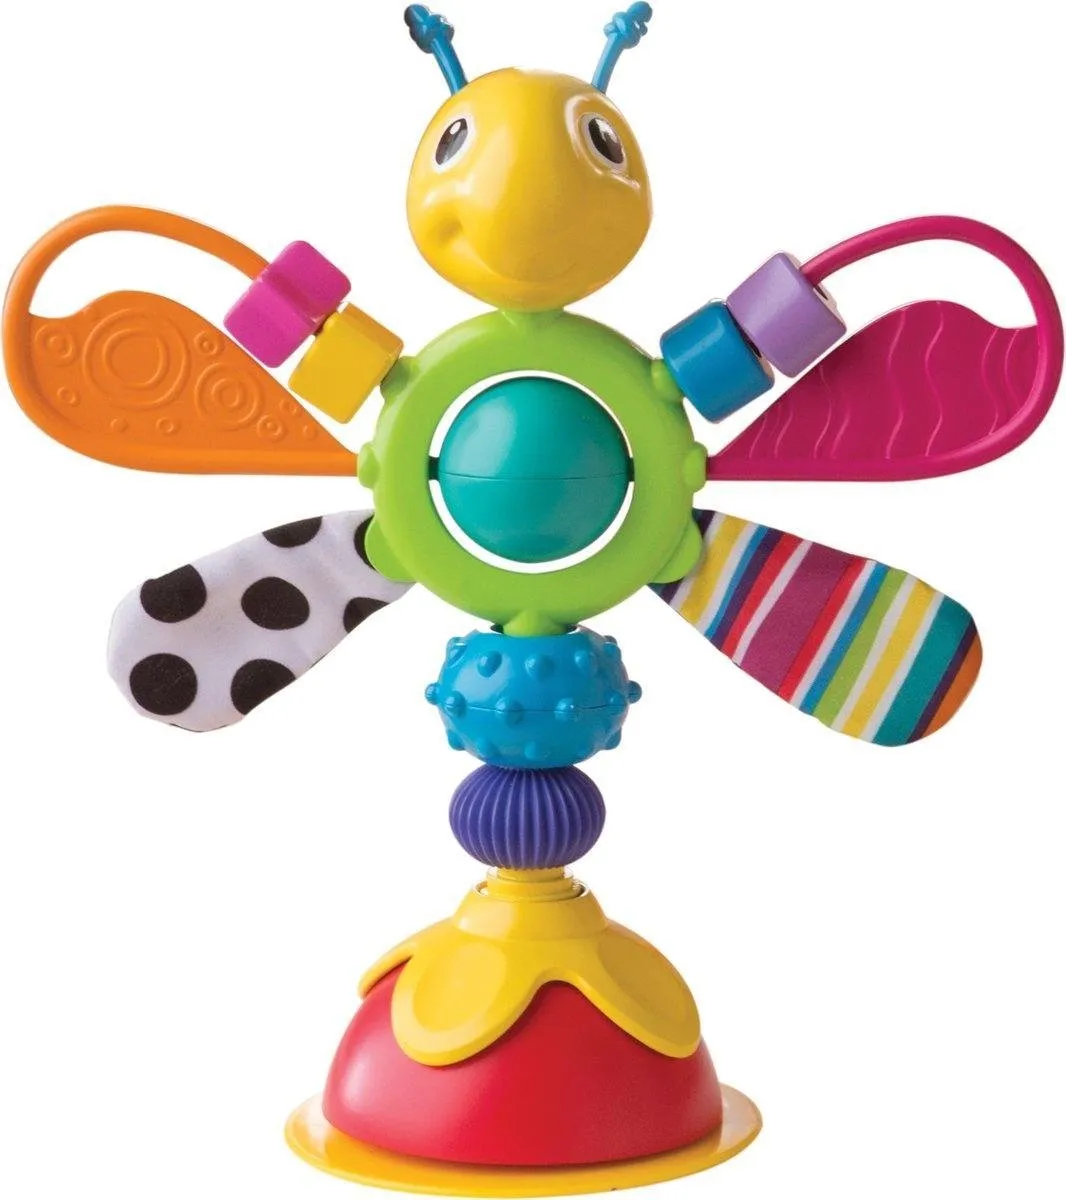 Lamaze Freddie de Vuurvlieg Kinderstoel Speeltje speelgoed